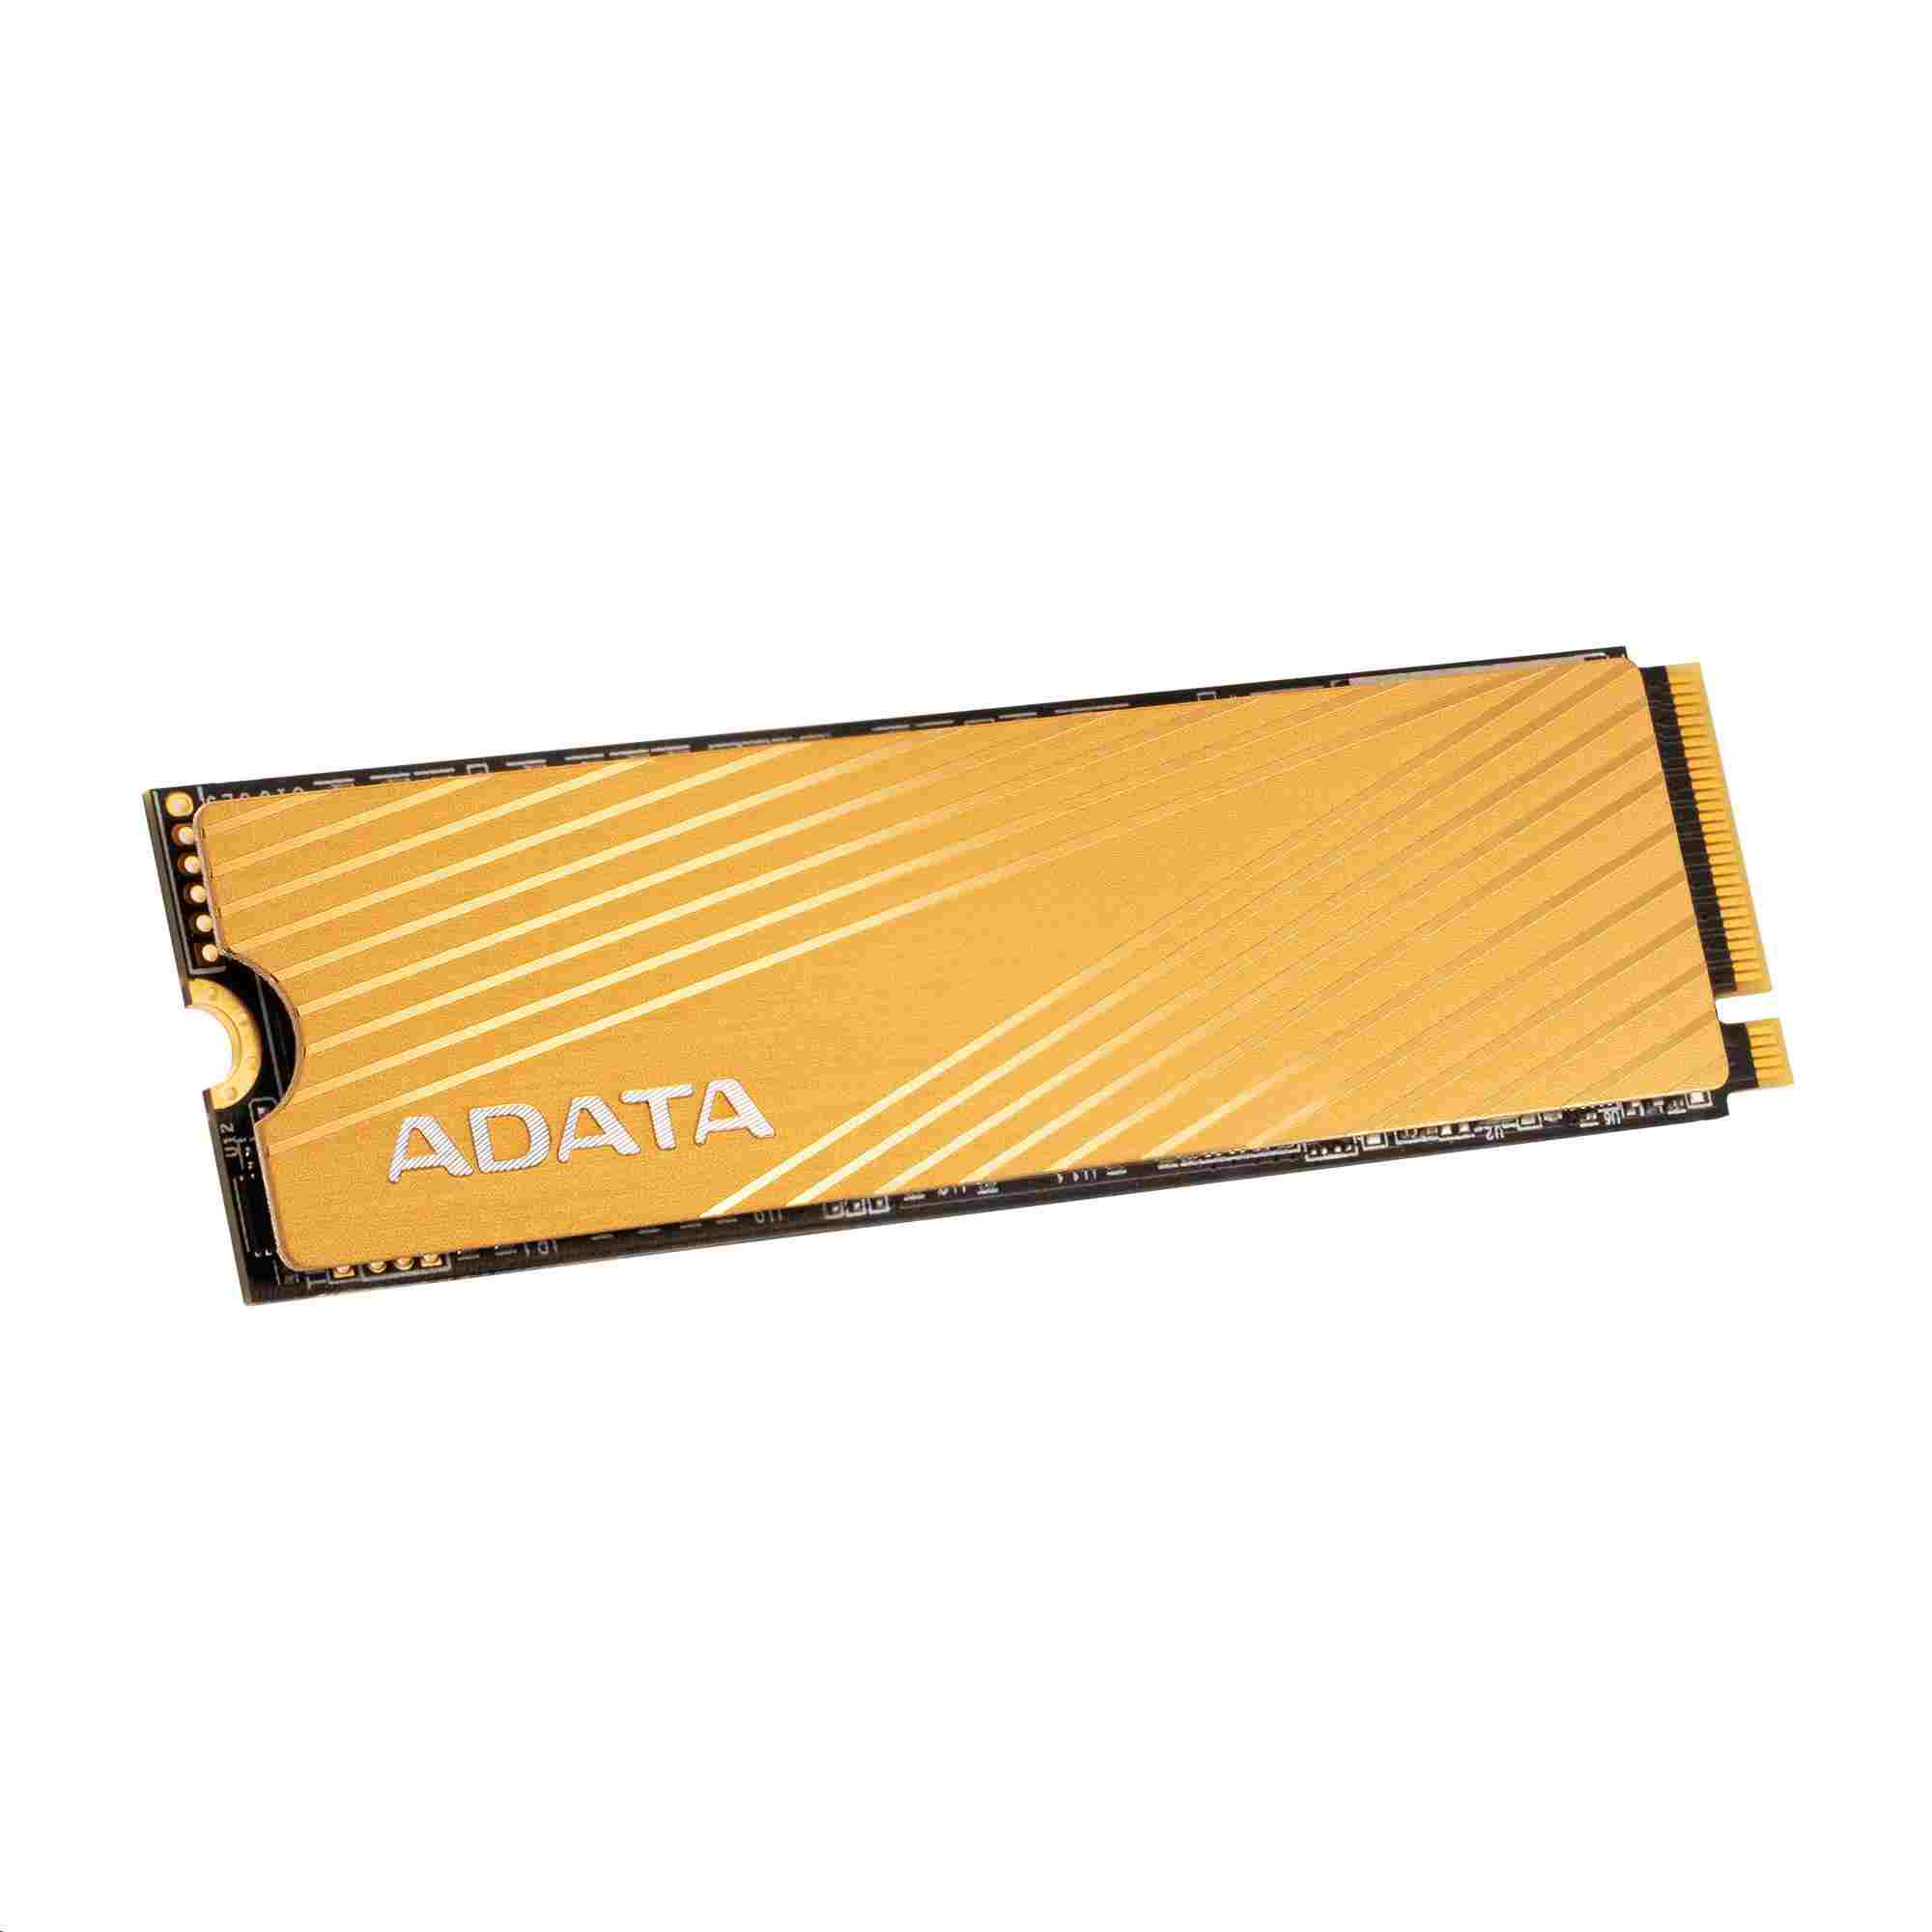 ADATA SSD 512GB FALCON PCIe Gen3x4 M.2 2280 (R:3100/  W:1500MB/ s)1 